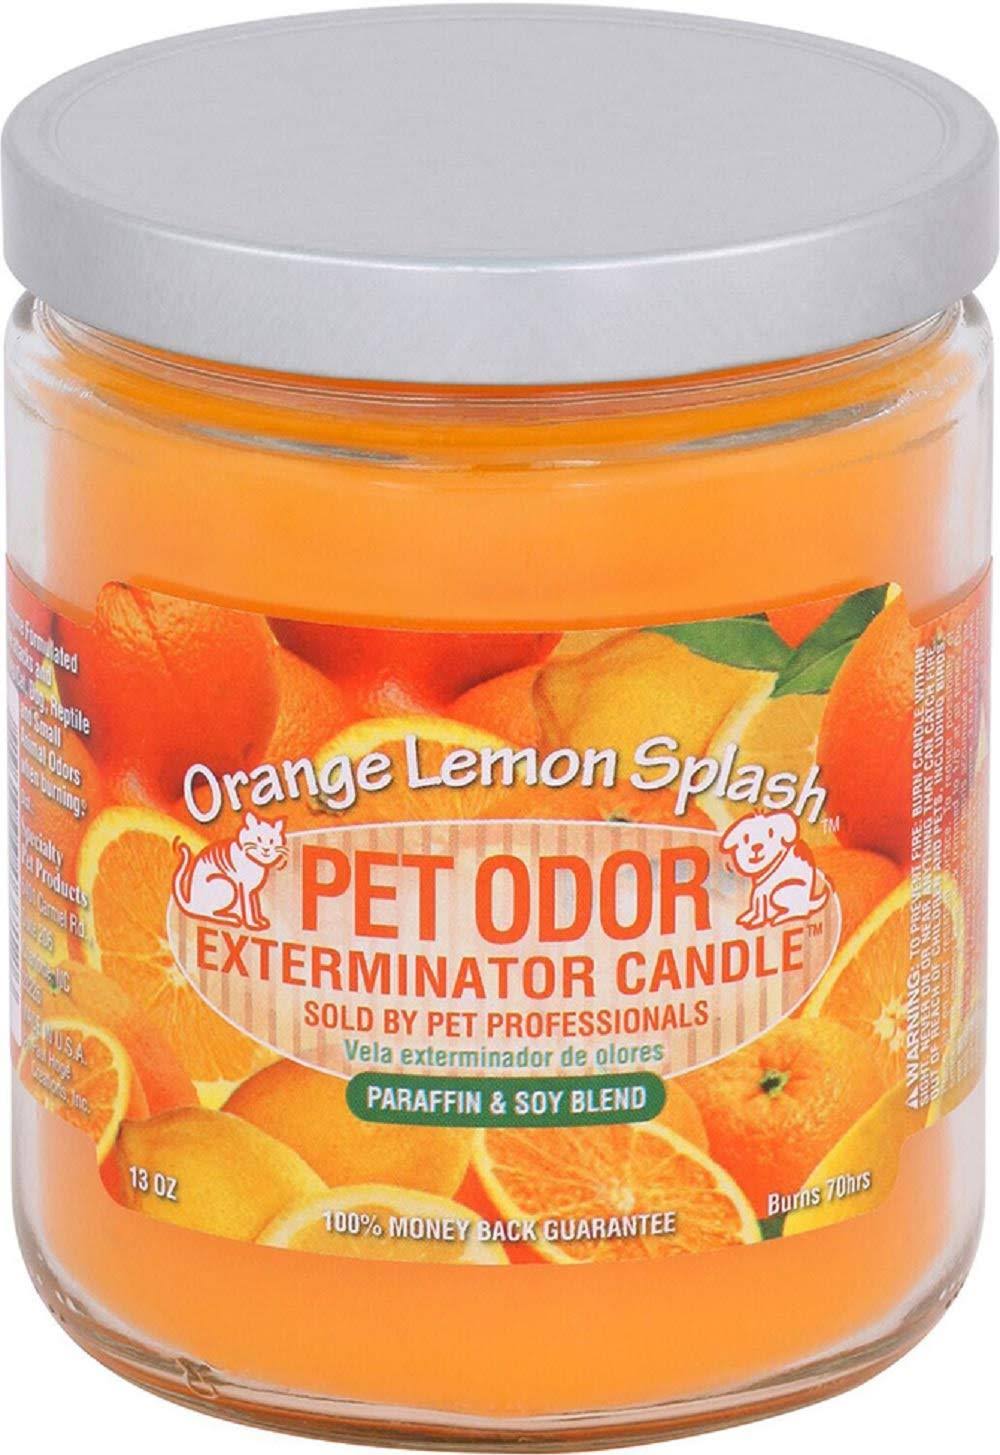 Pet Odor Exterminator Candle - Orange Lemon Splash,13oz